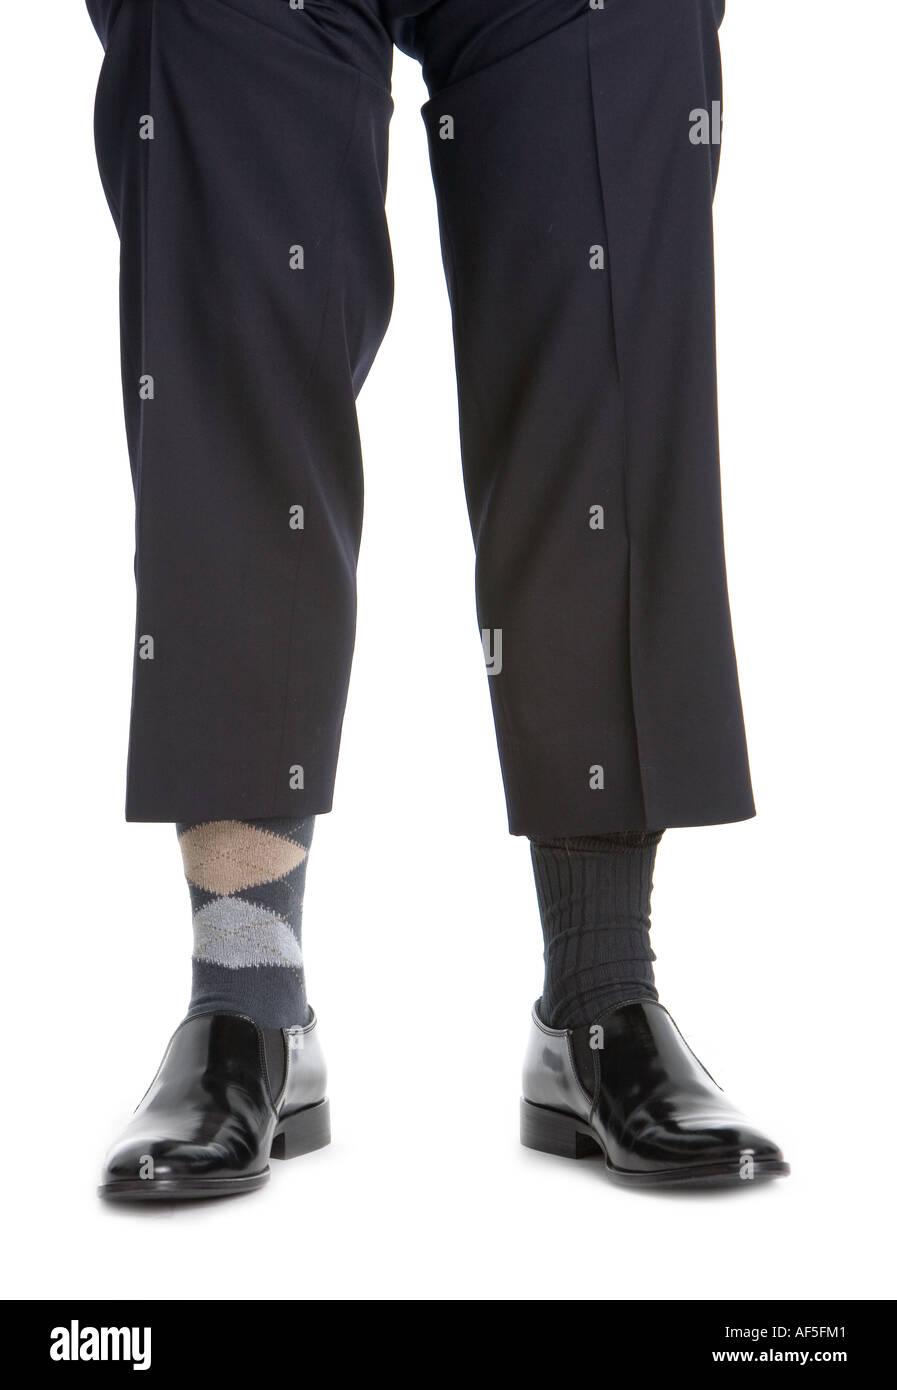 Business man wearing odd socks Stock Photo